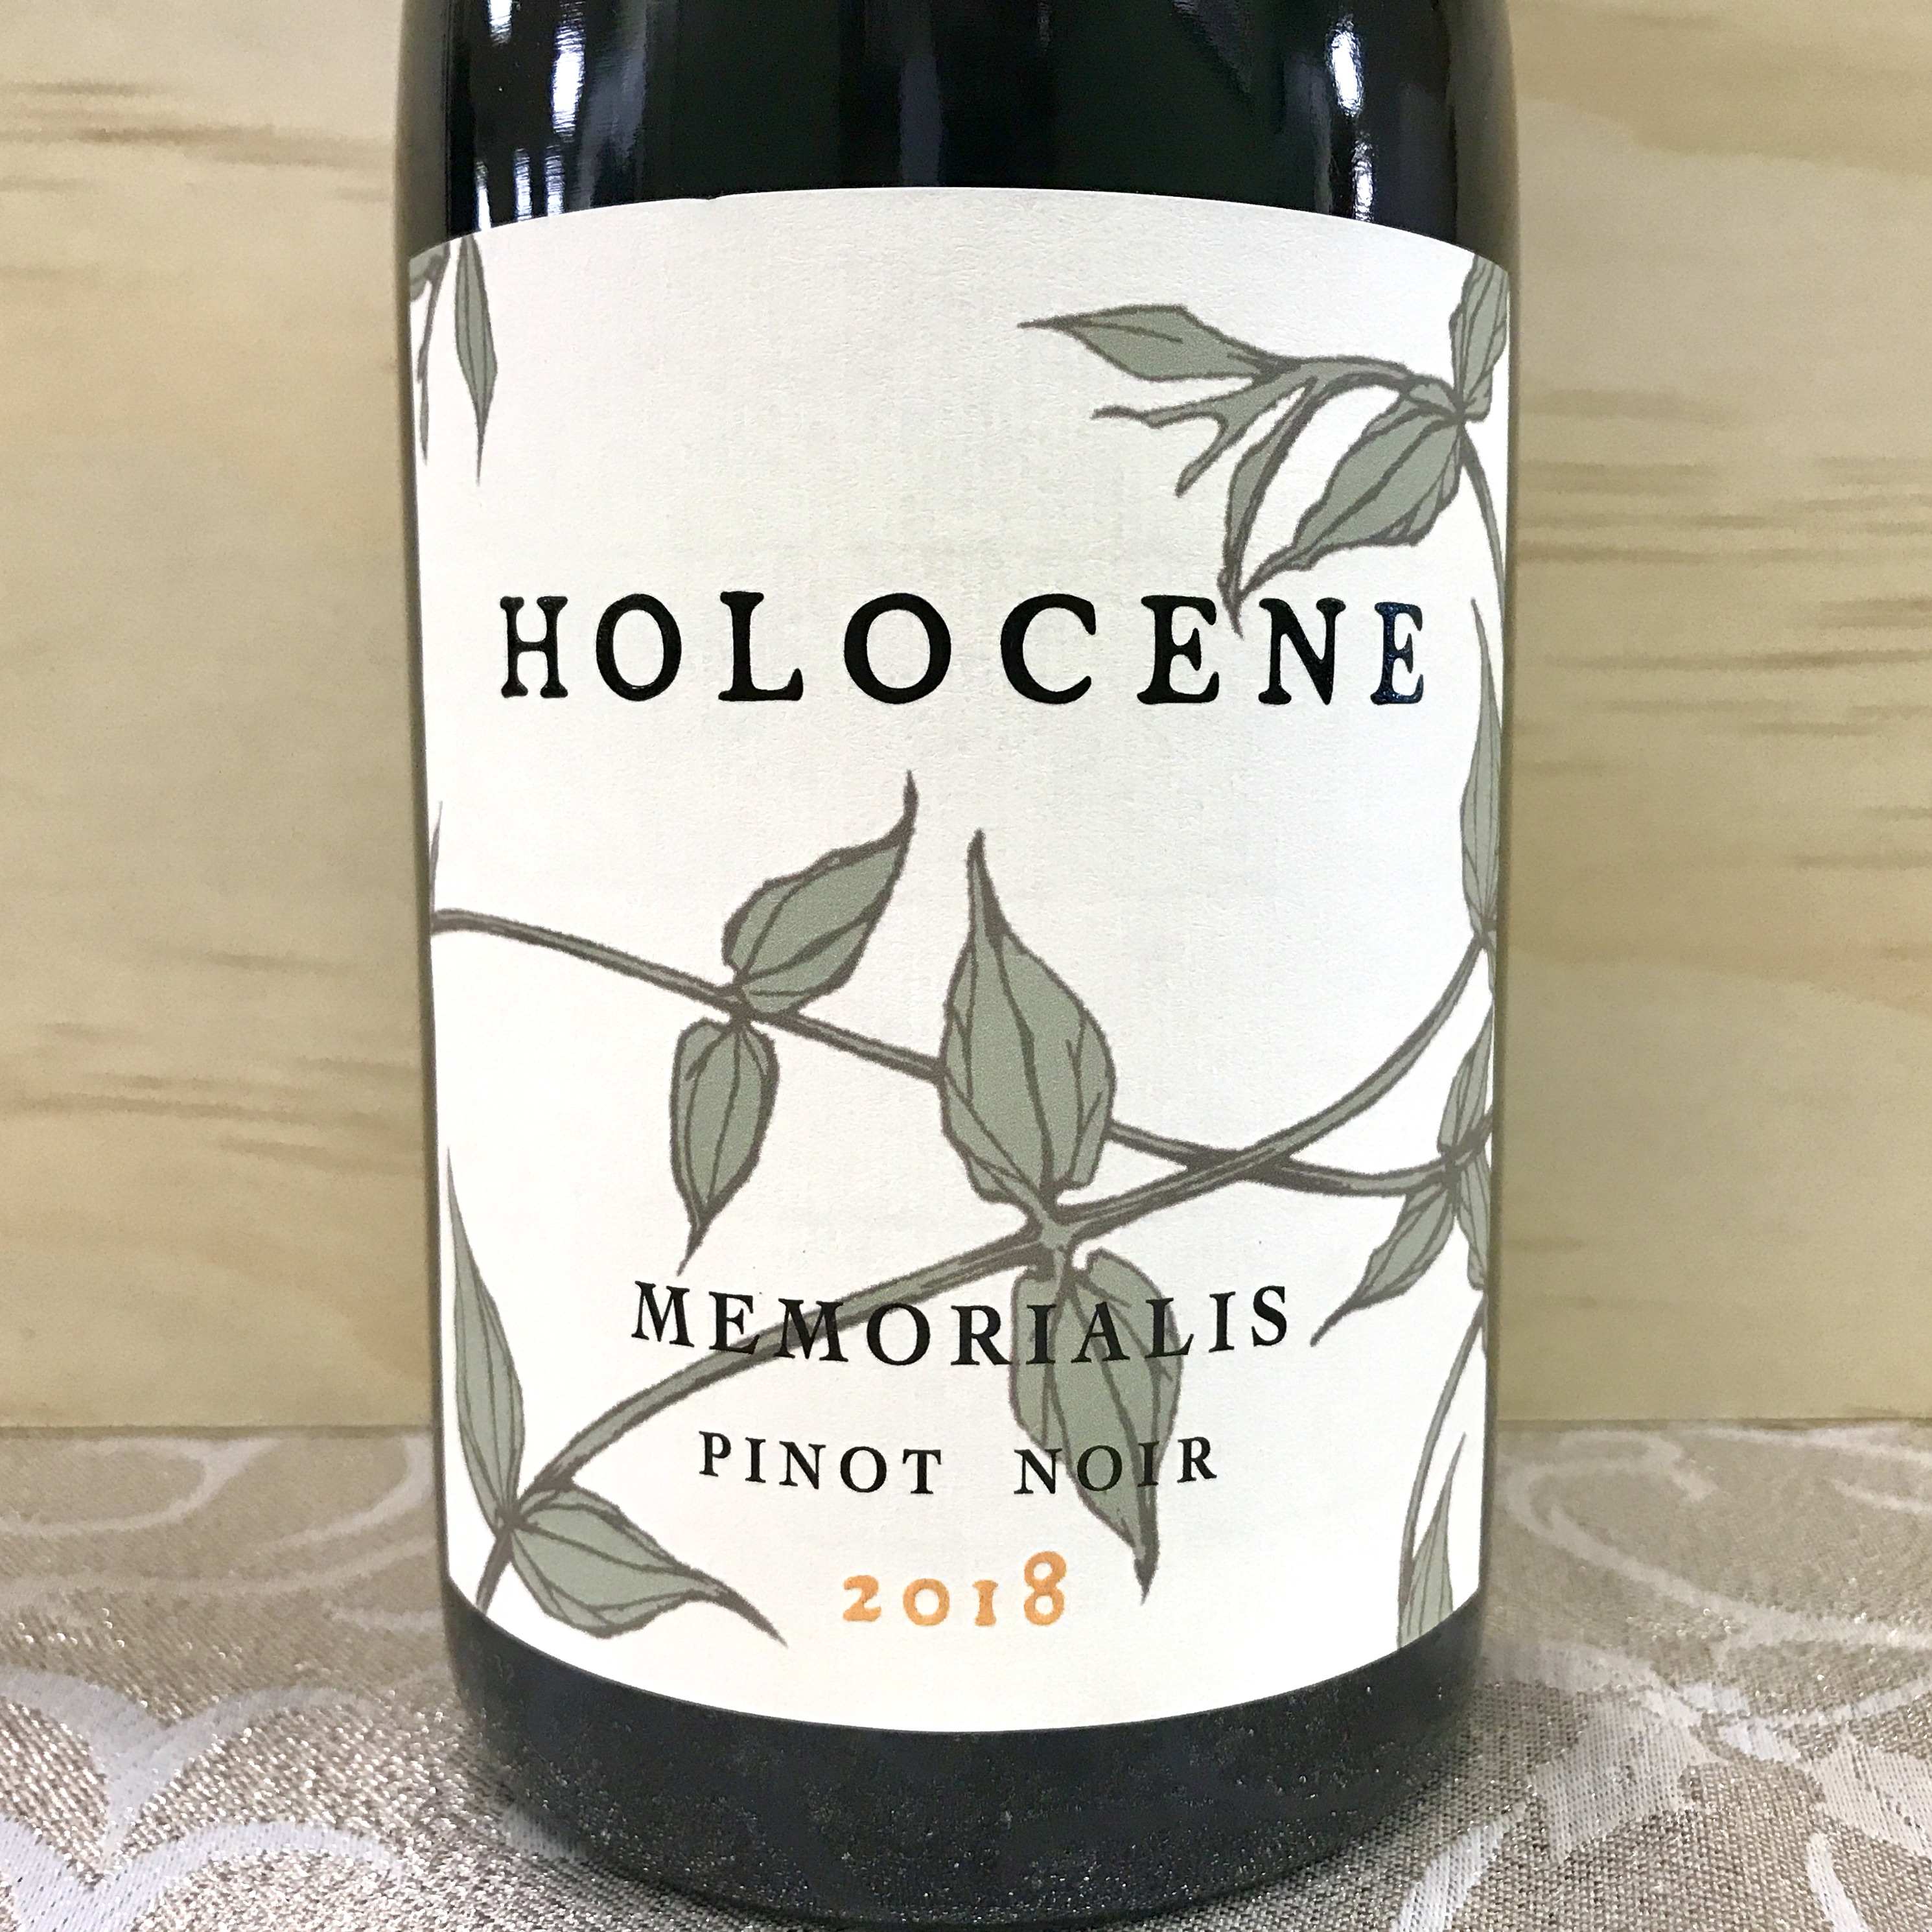 Holocene Memorialis Pinot Noir 2018